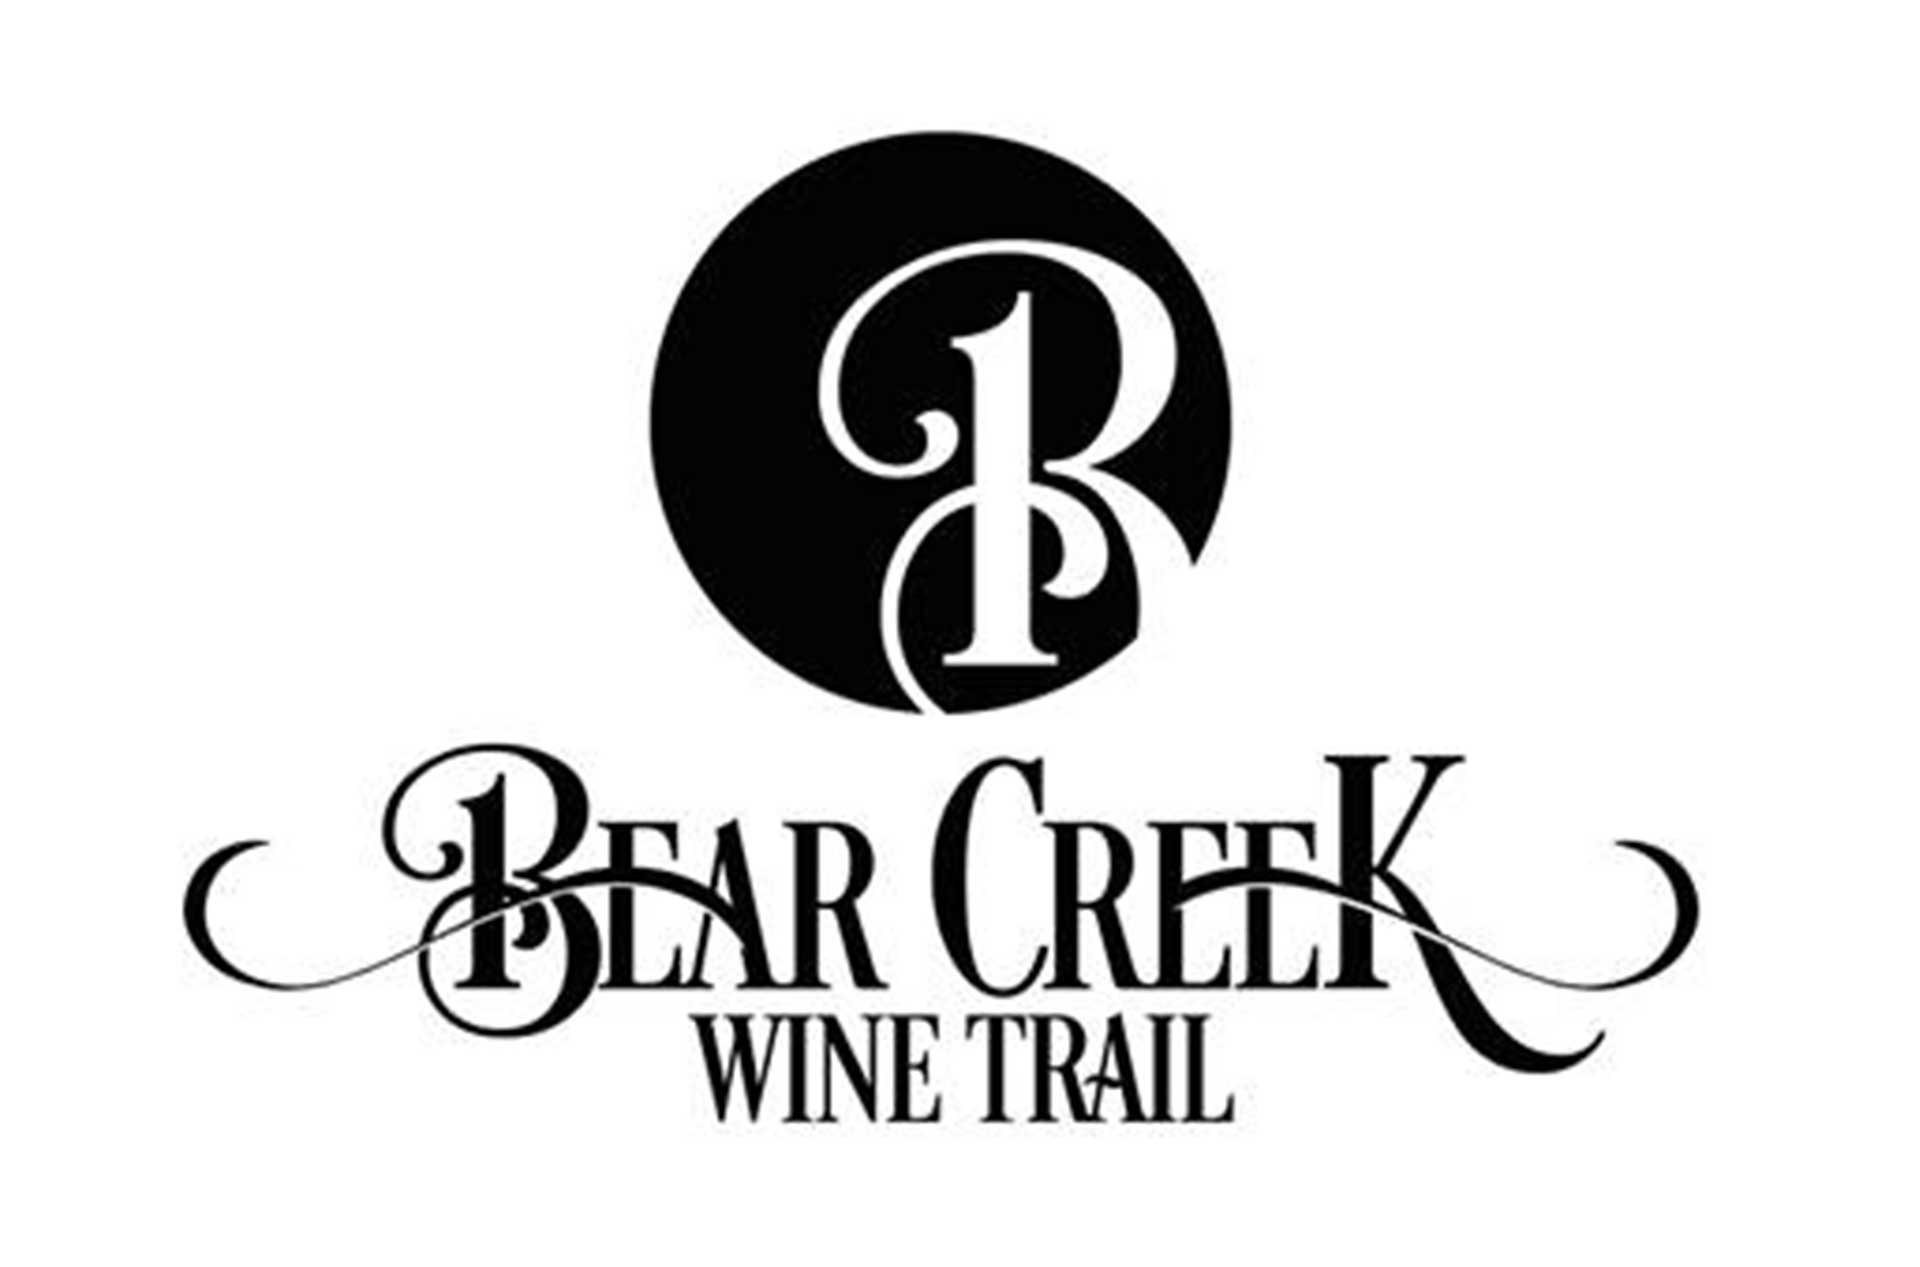 Bear Creek Wine Trail logo.